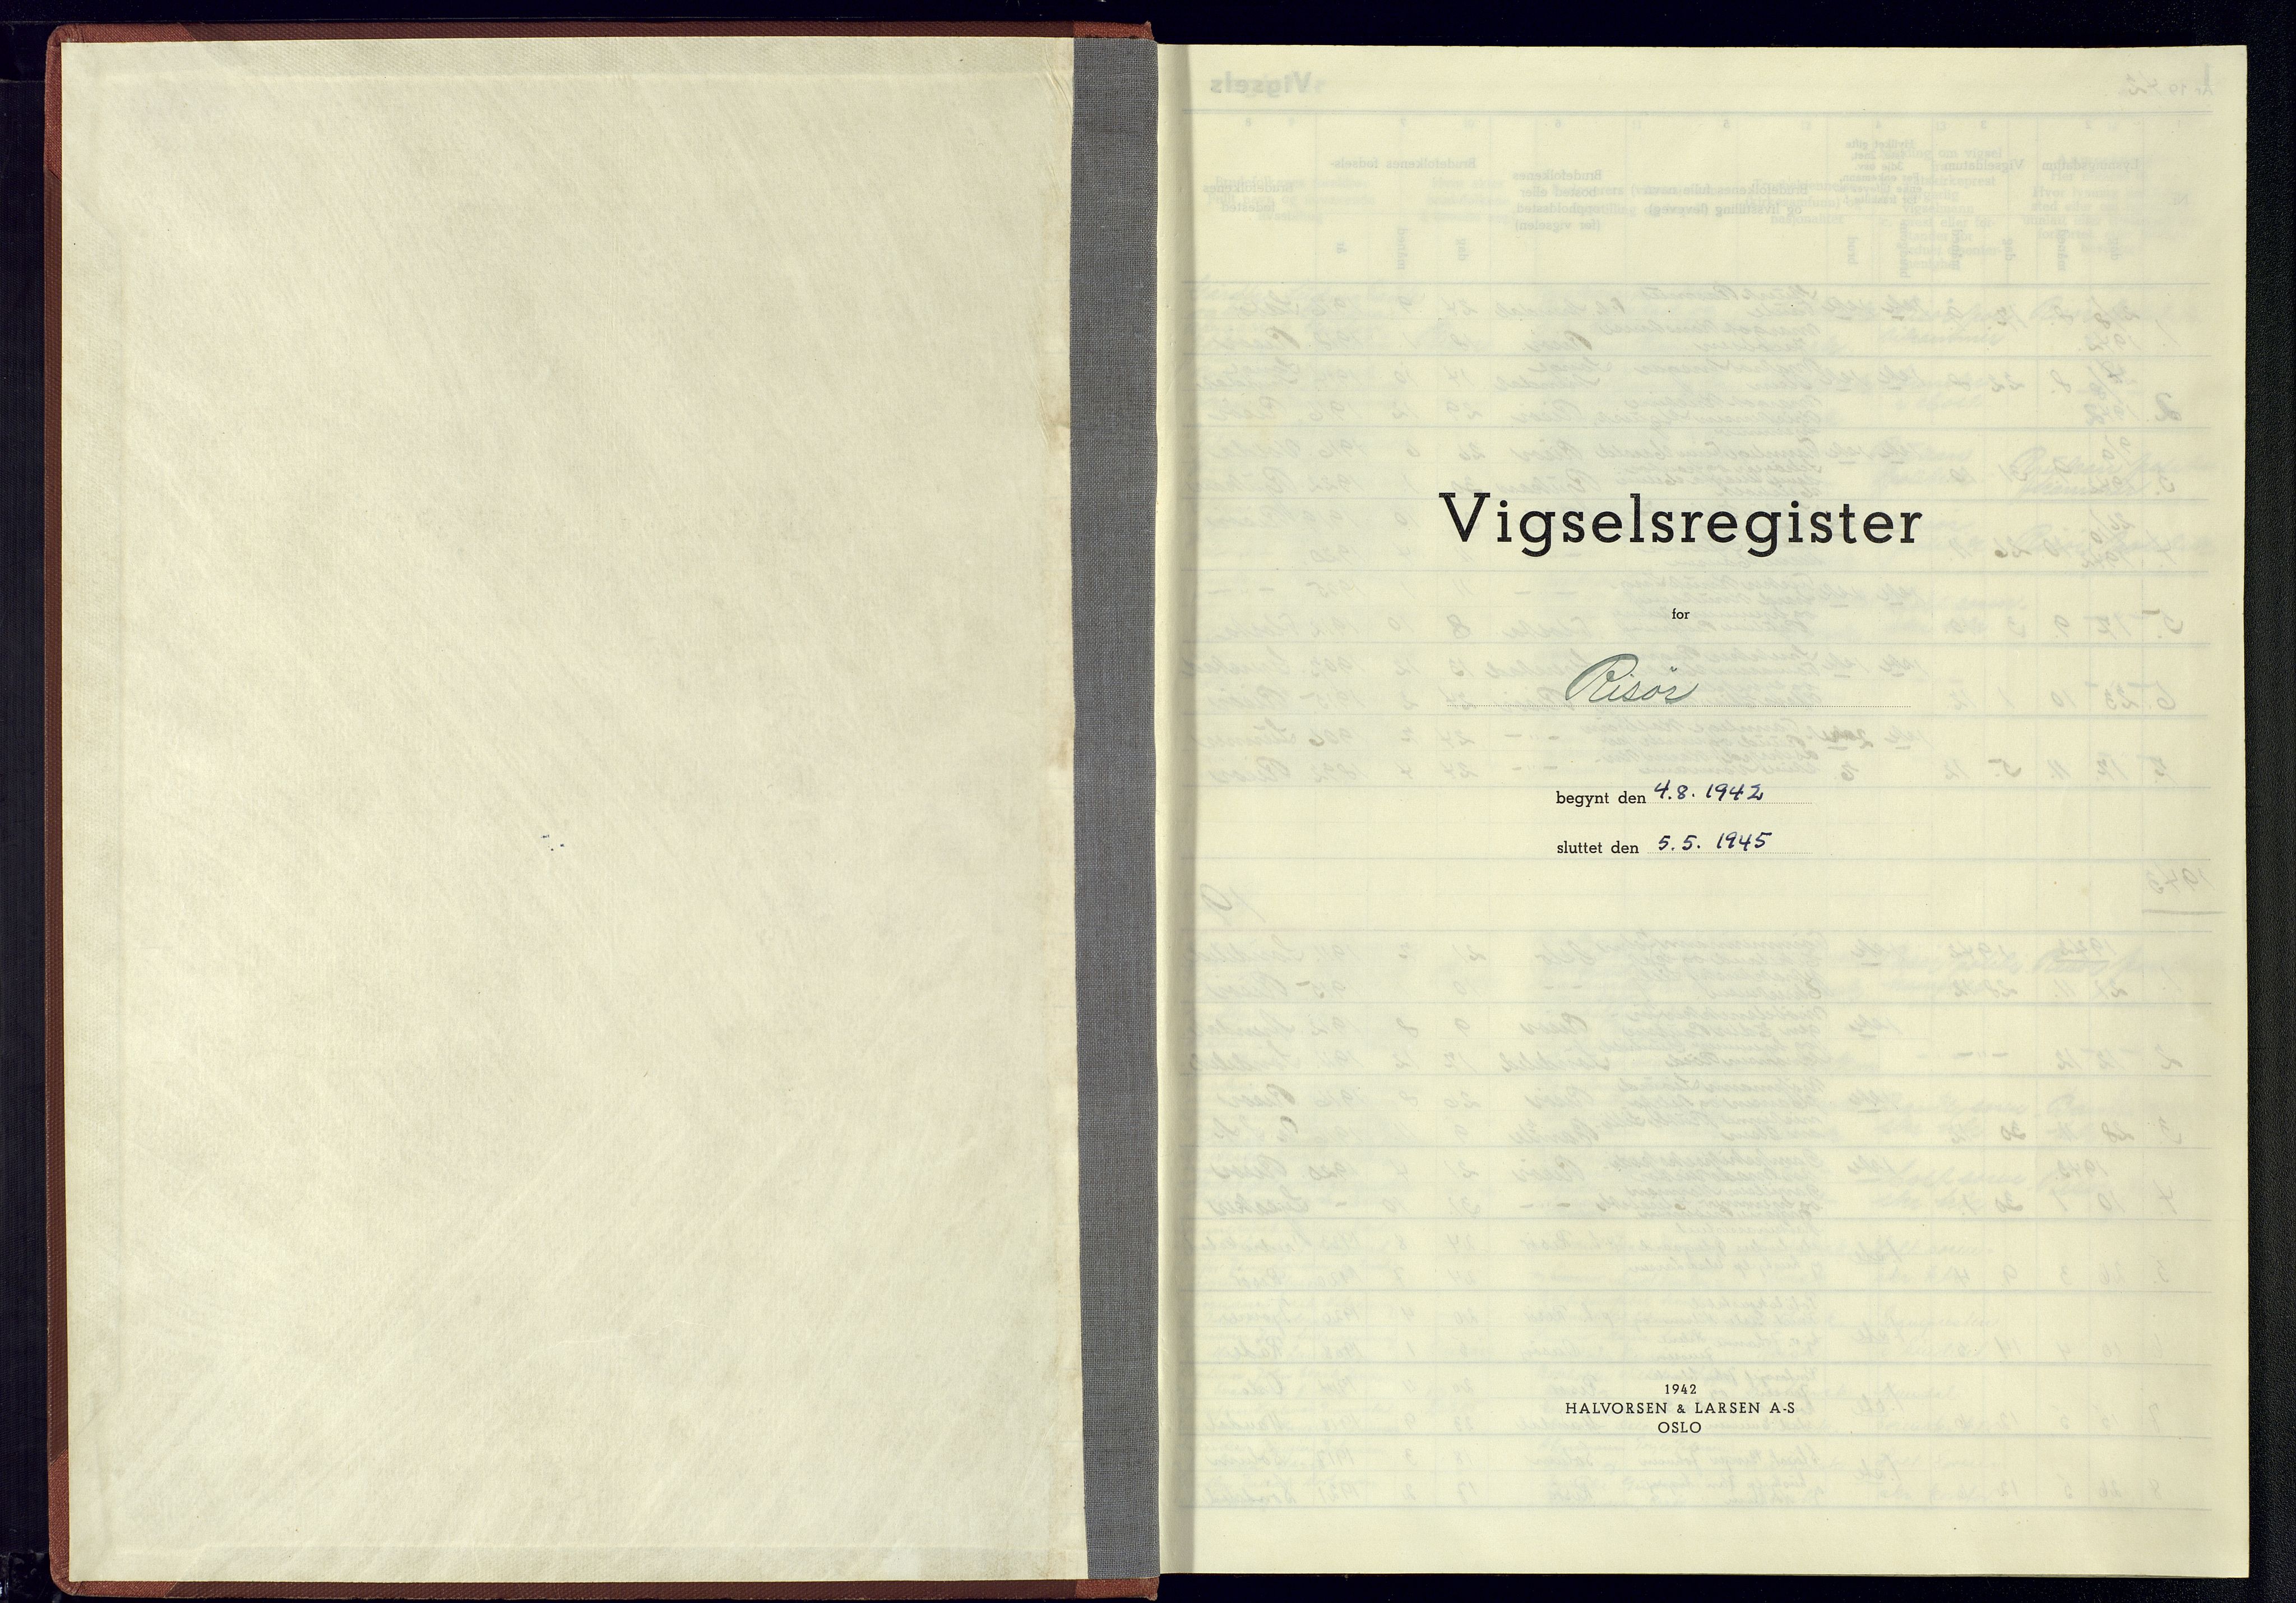 Risør sokneprestkontor, SAK/1111-0035/J/Jb/L0003: Vigselsregister nr. A-VI-9, 1942-1945